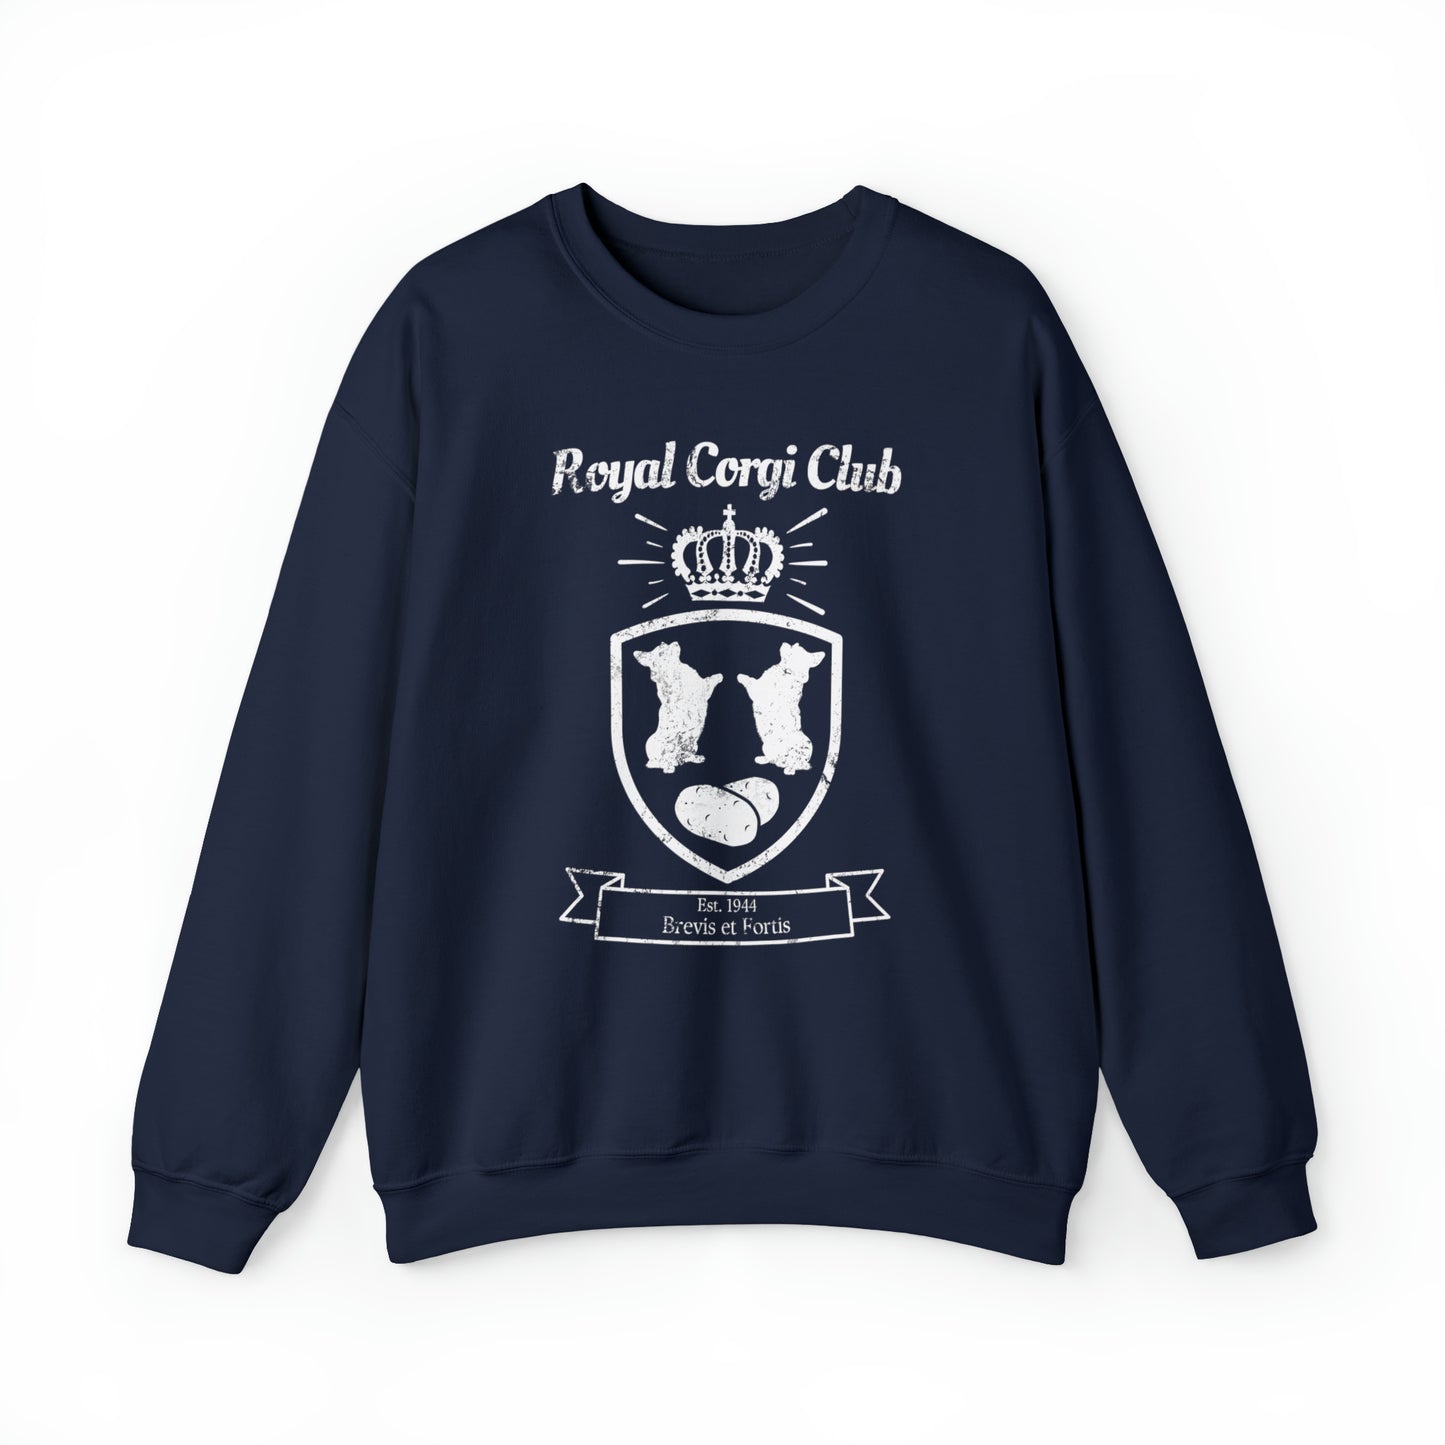 navy blue royal corgi club potato shield Pembroke Welsch sweatshirt women men unisex sweater